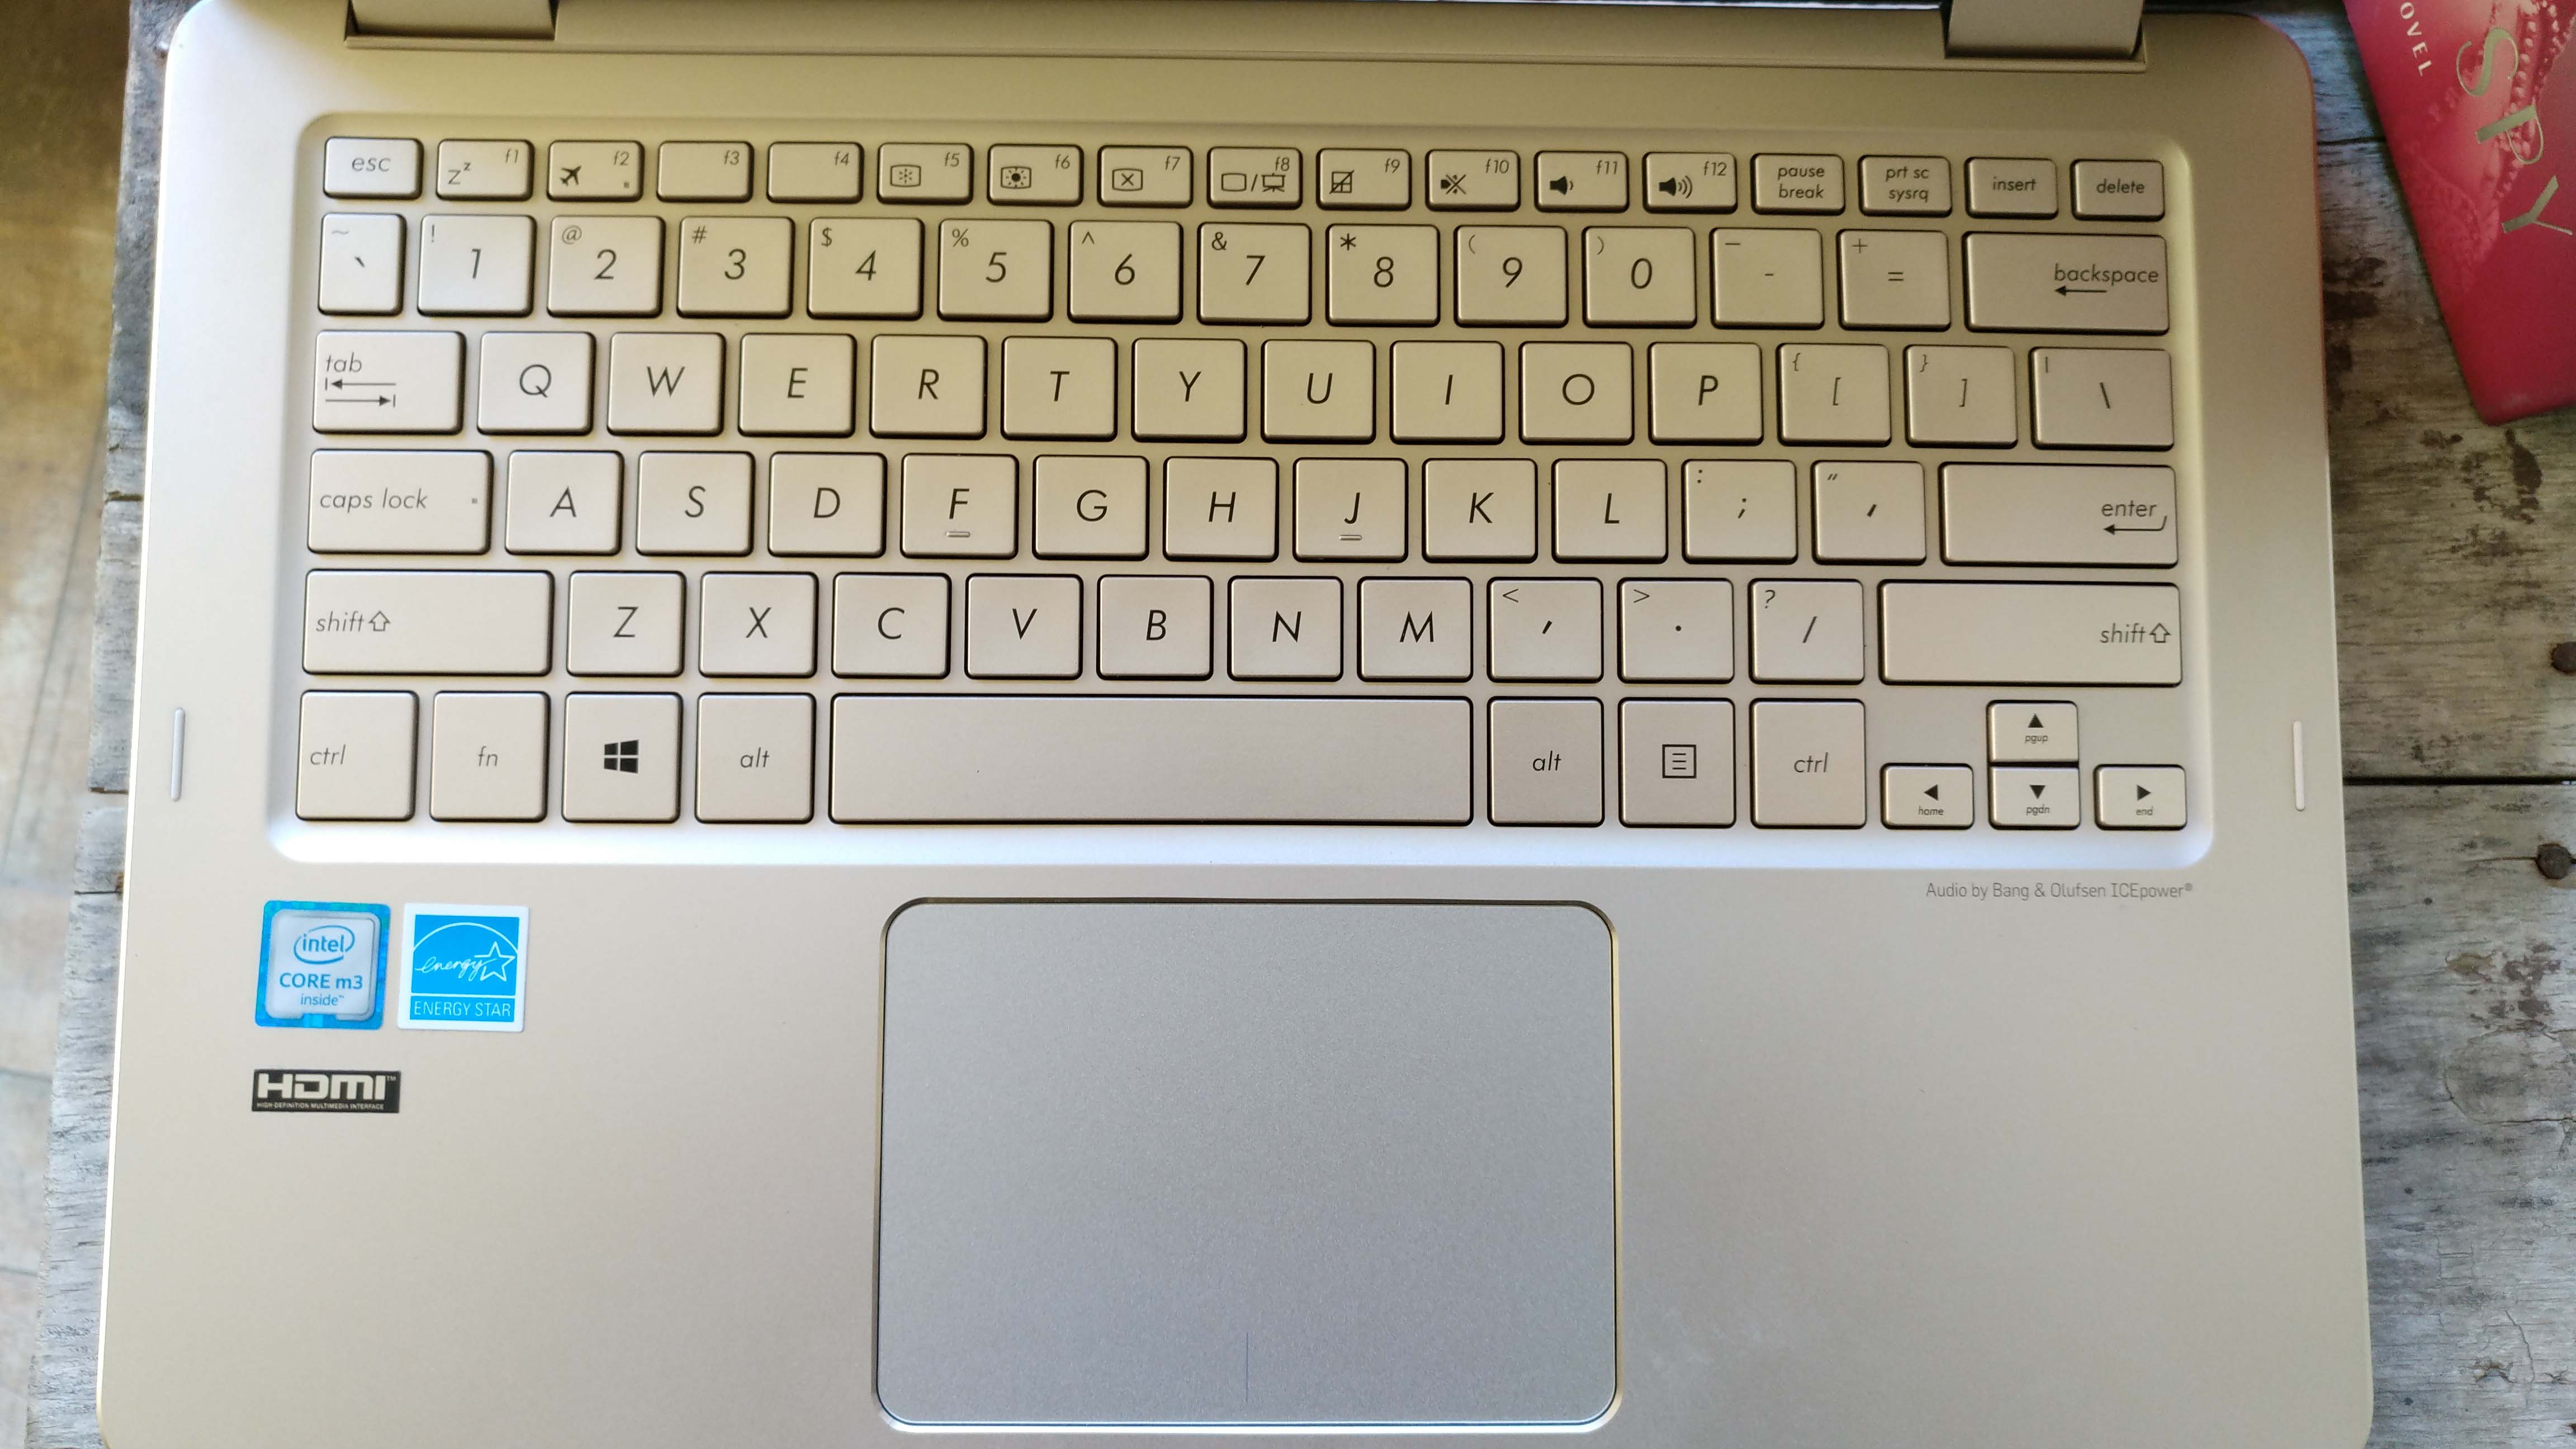 Asus Zenbook Flip keyboard